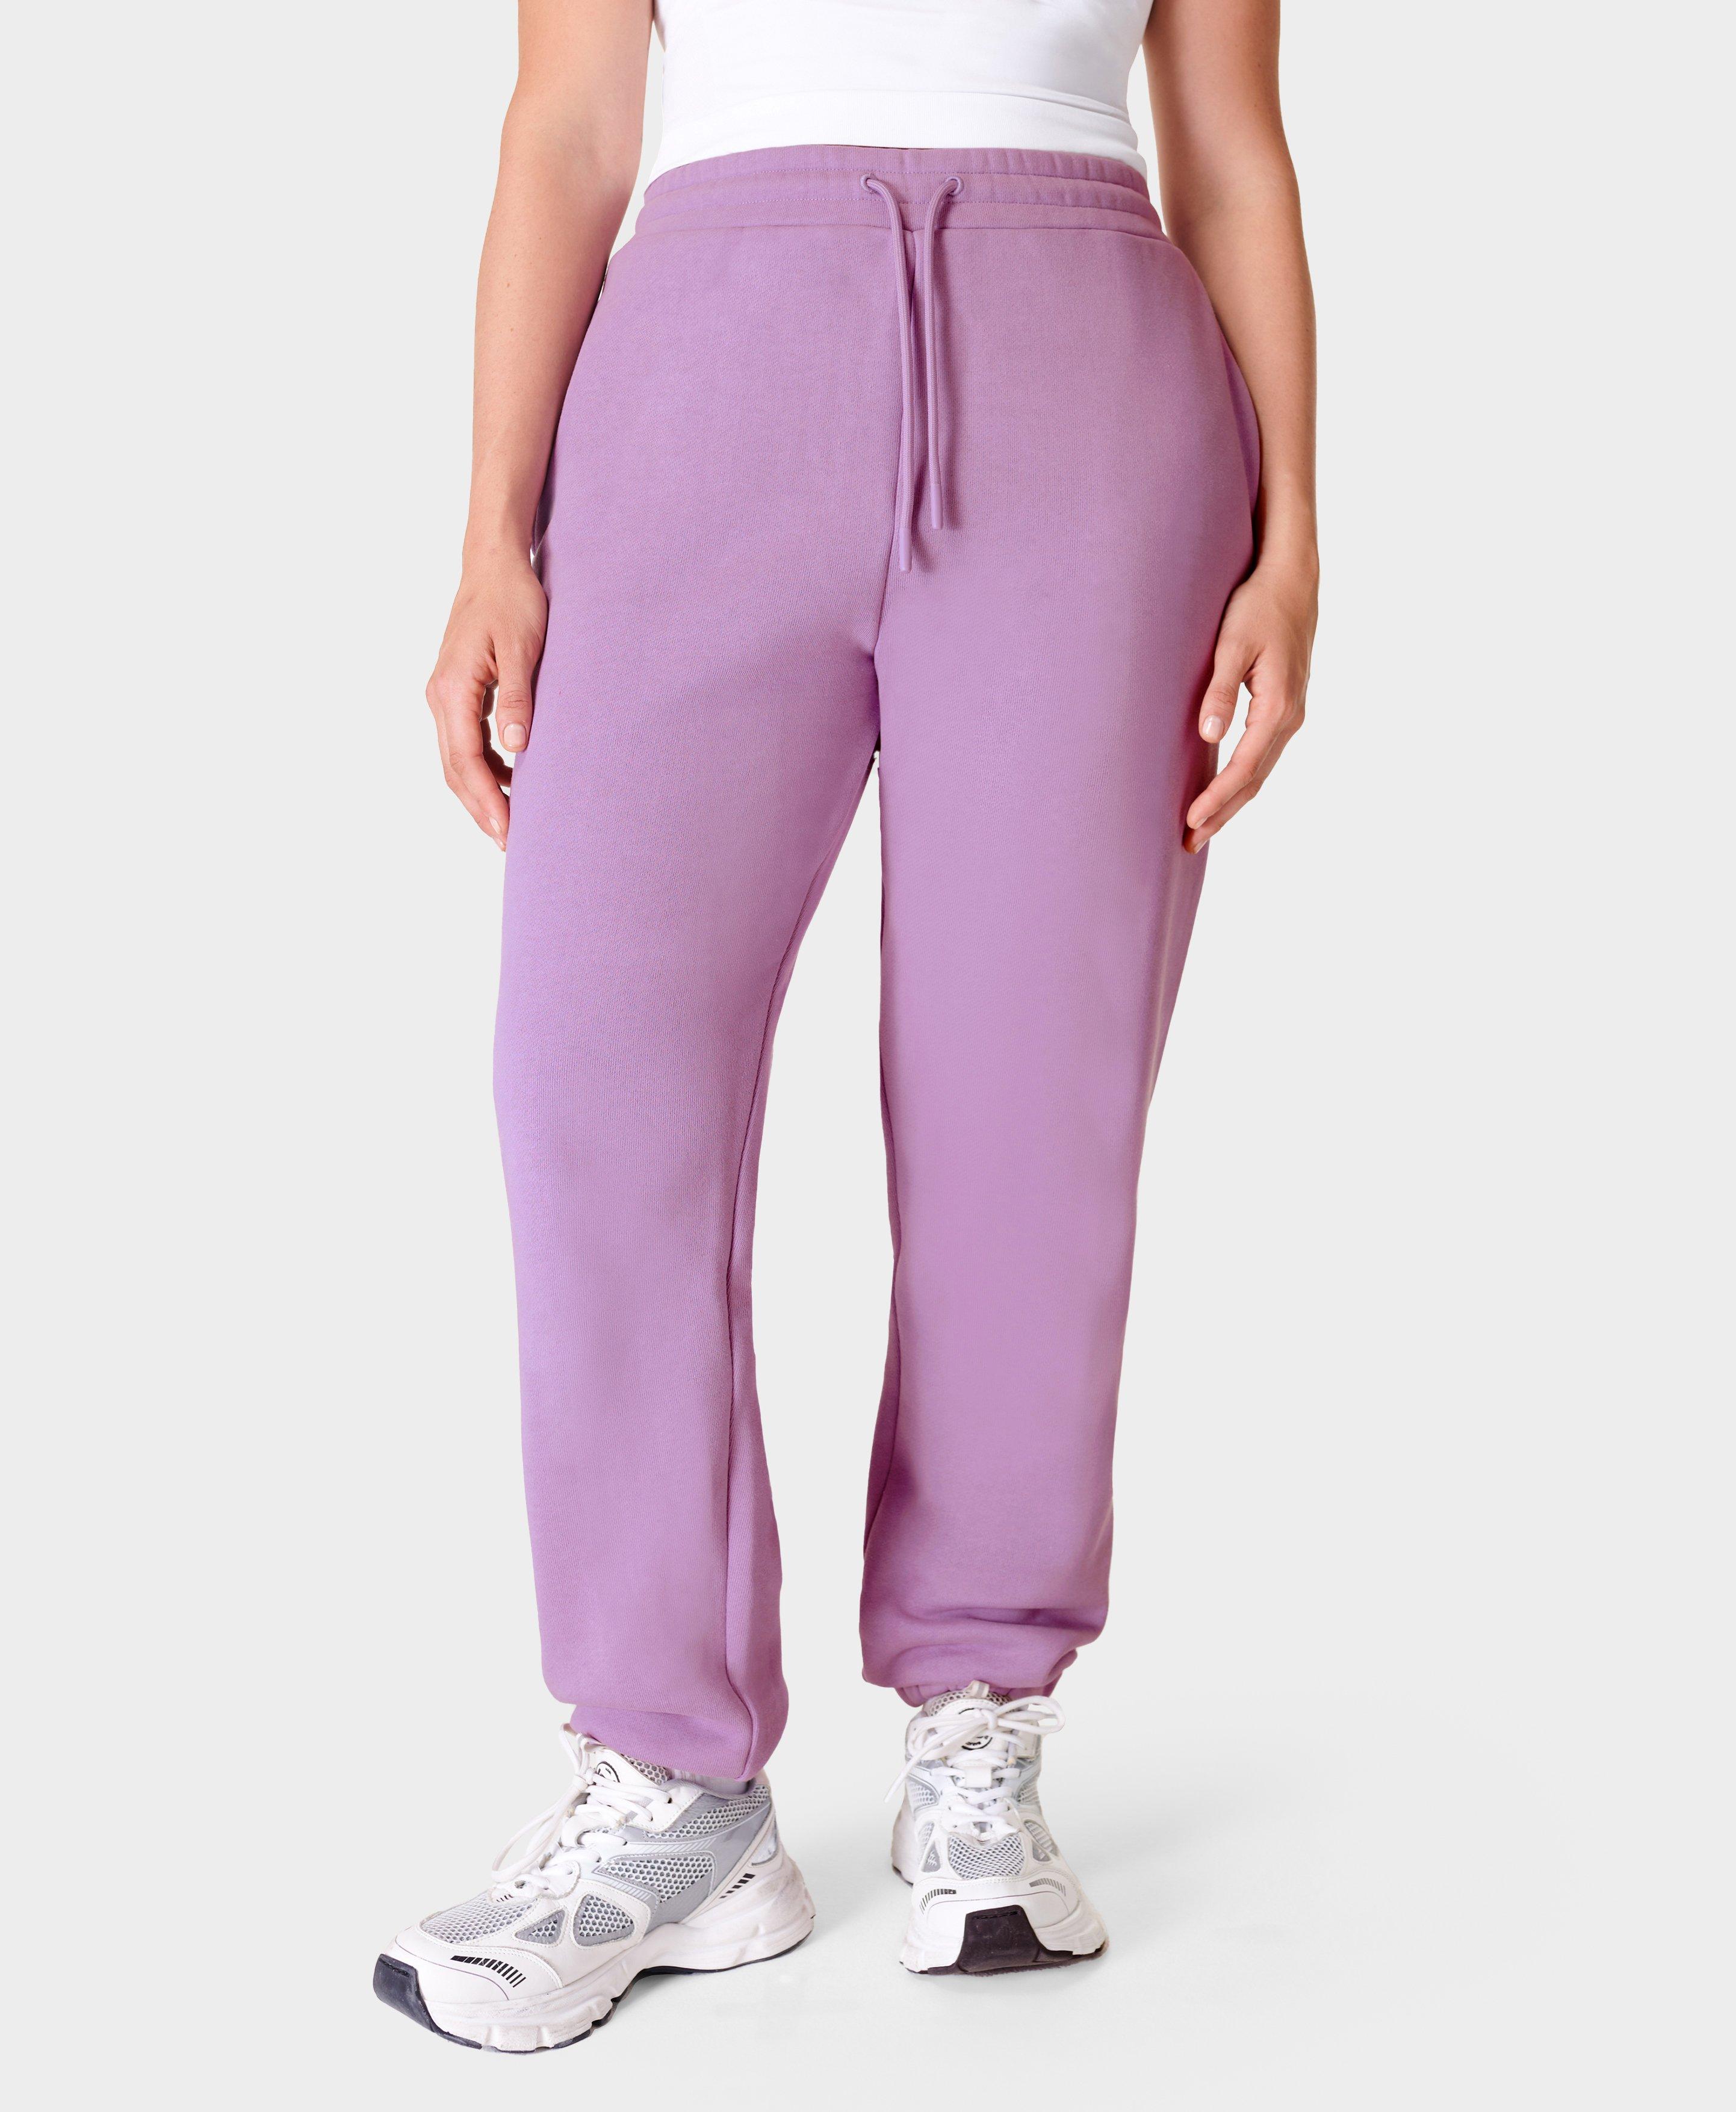 Powerhouse Jogger - Lily Purple, Women's Trousers & Yoga Pants